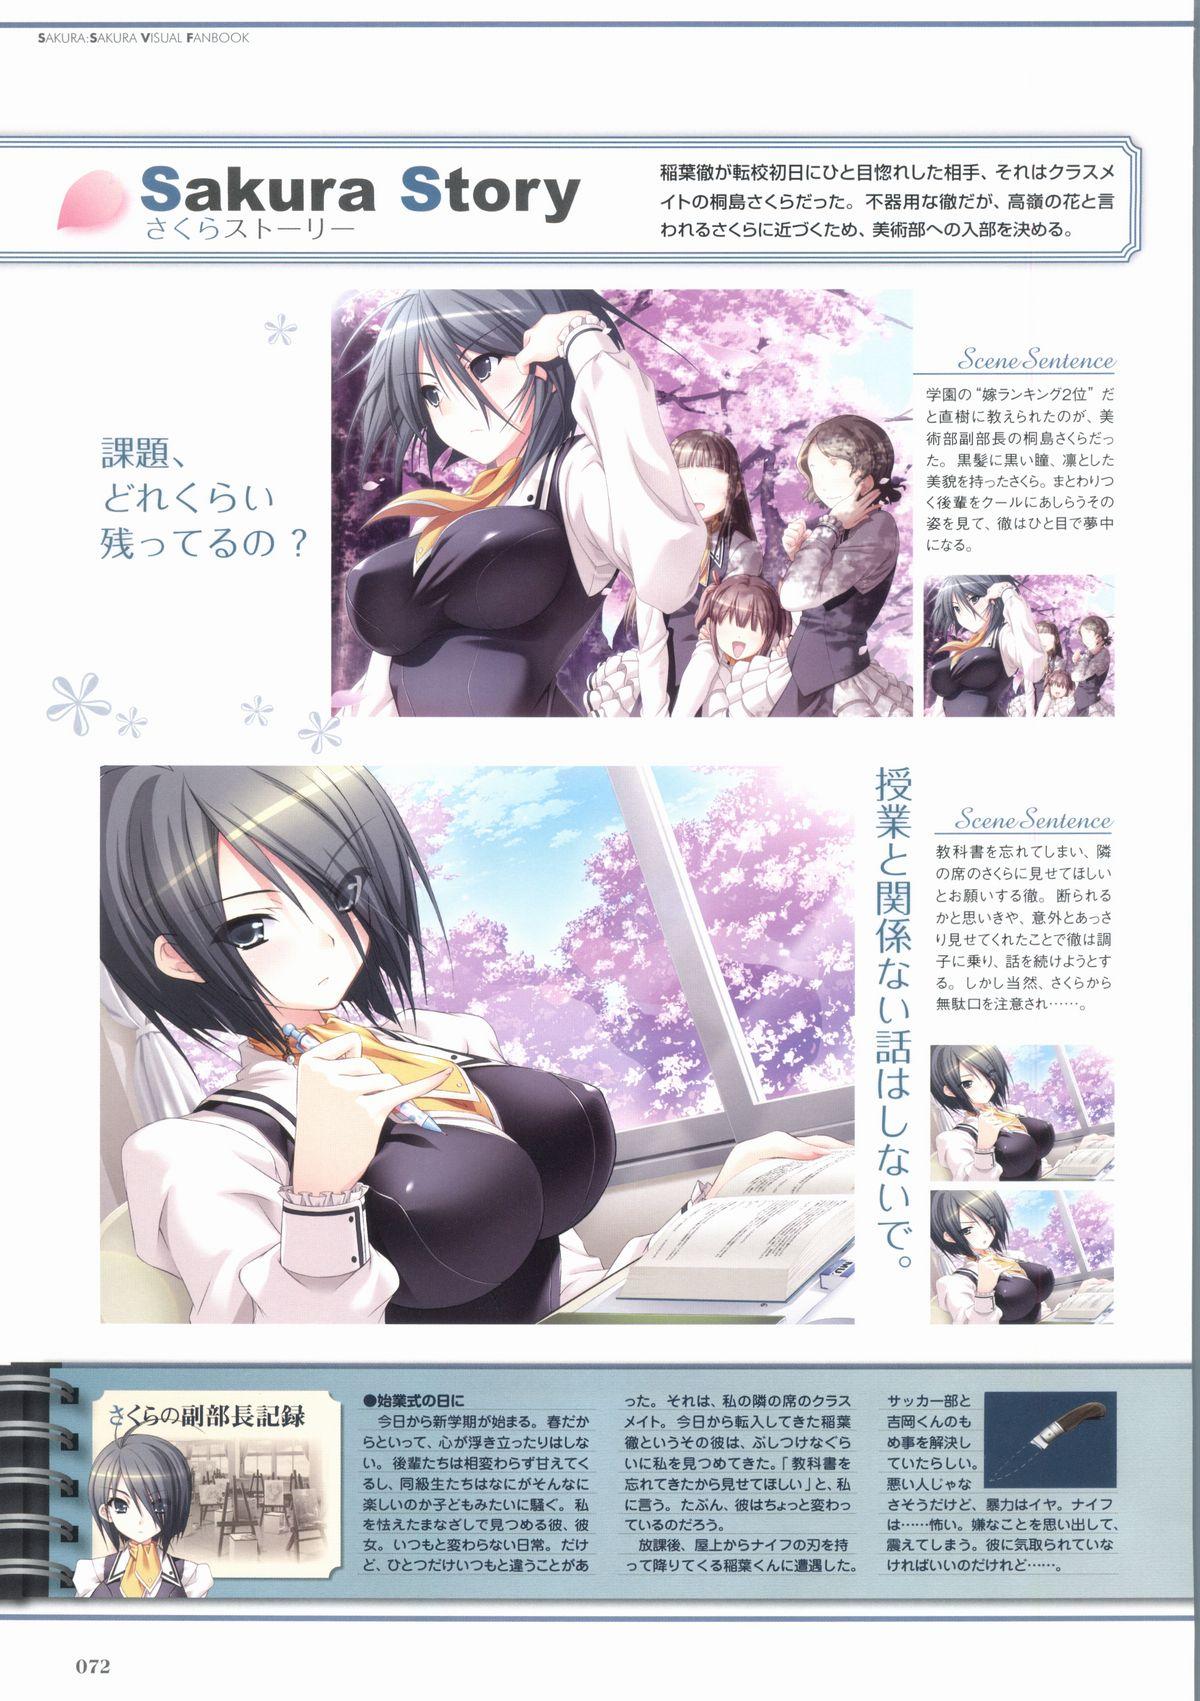 Sakura Sakura Visual Fan Book 76